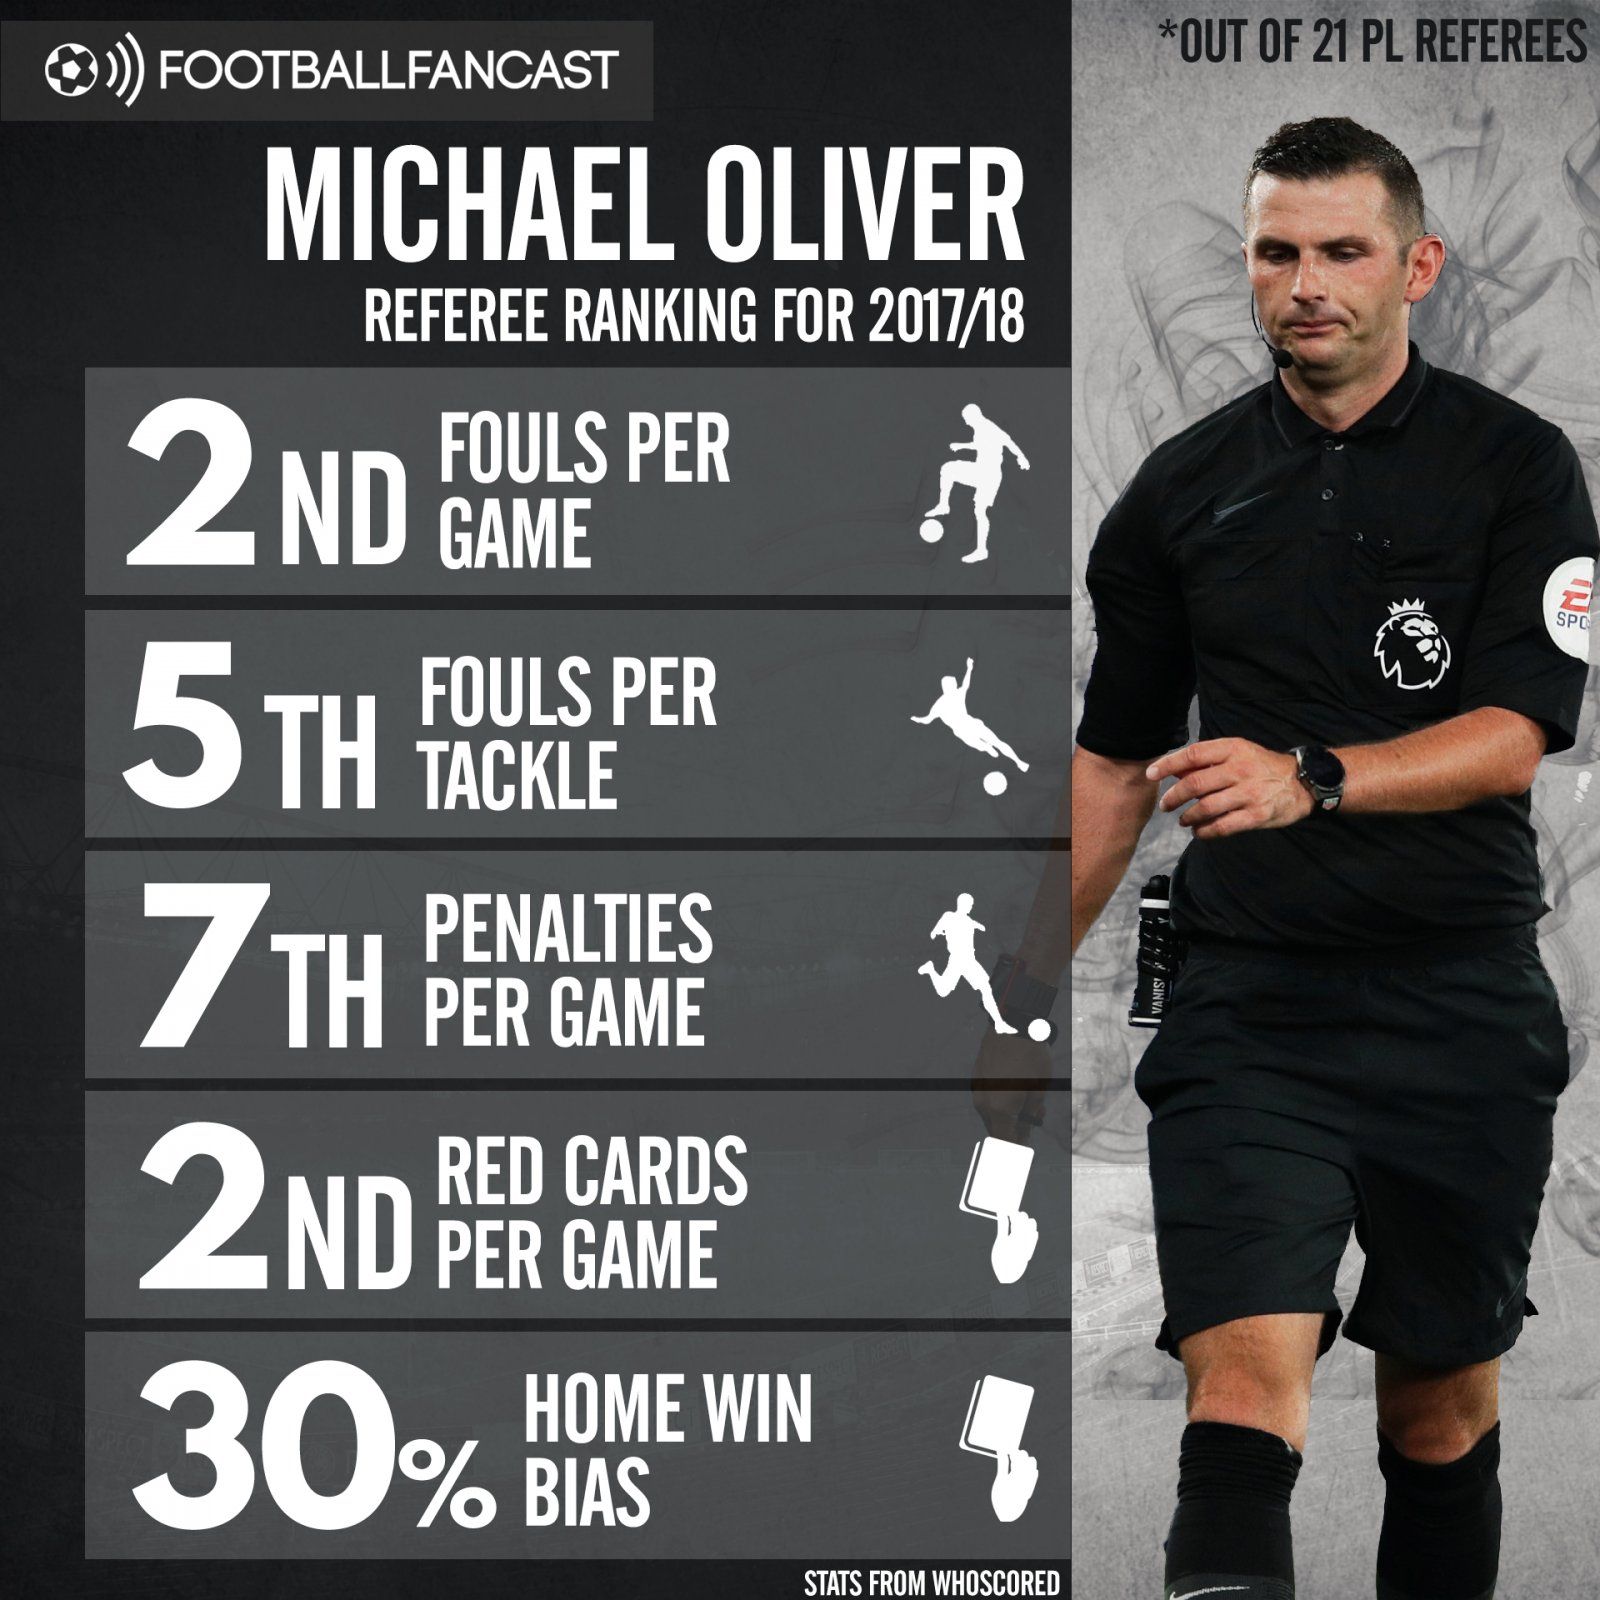 Michael Oliver's refereeing statistics